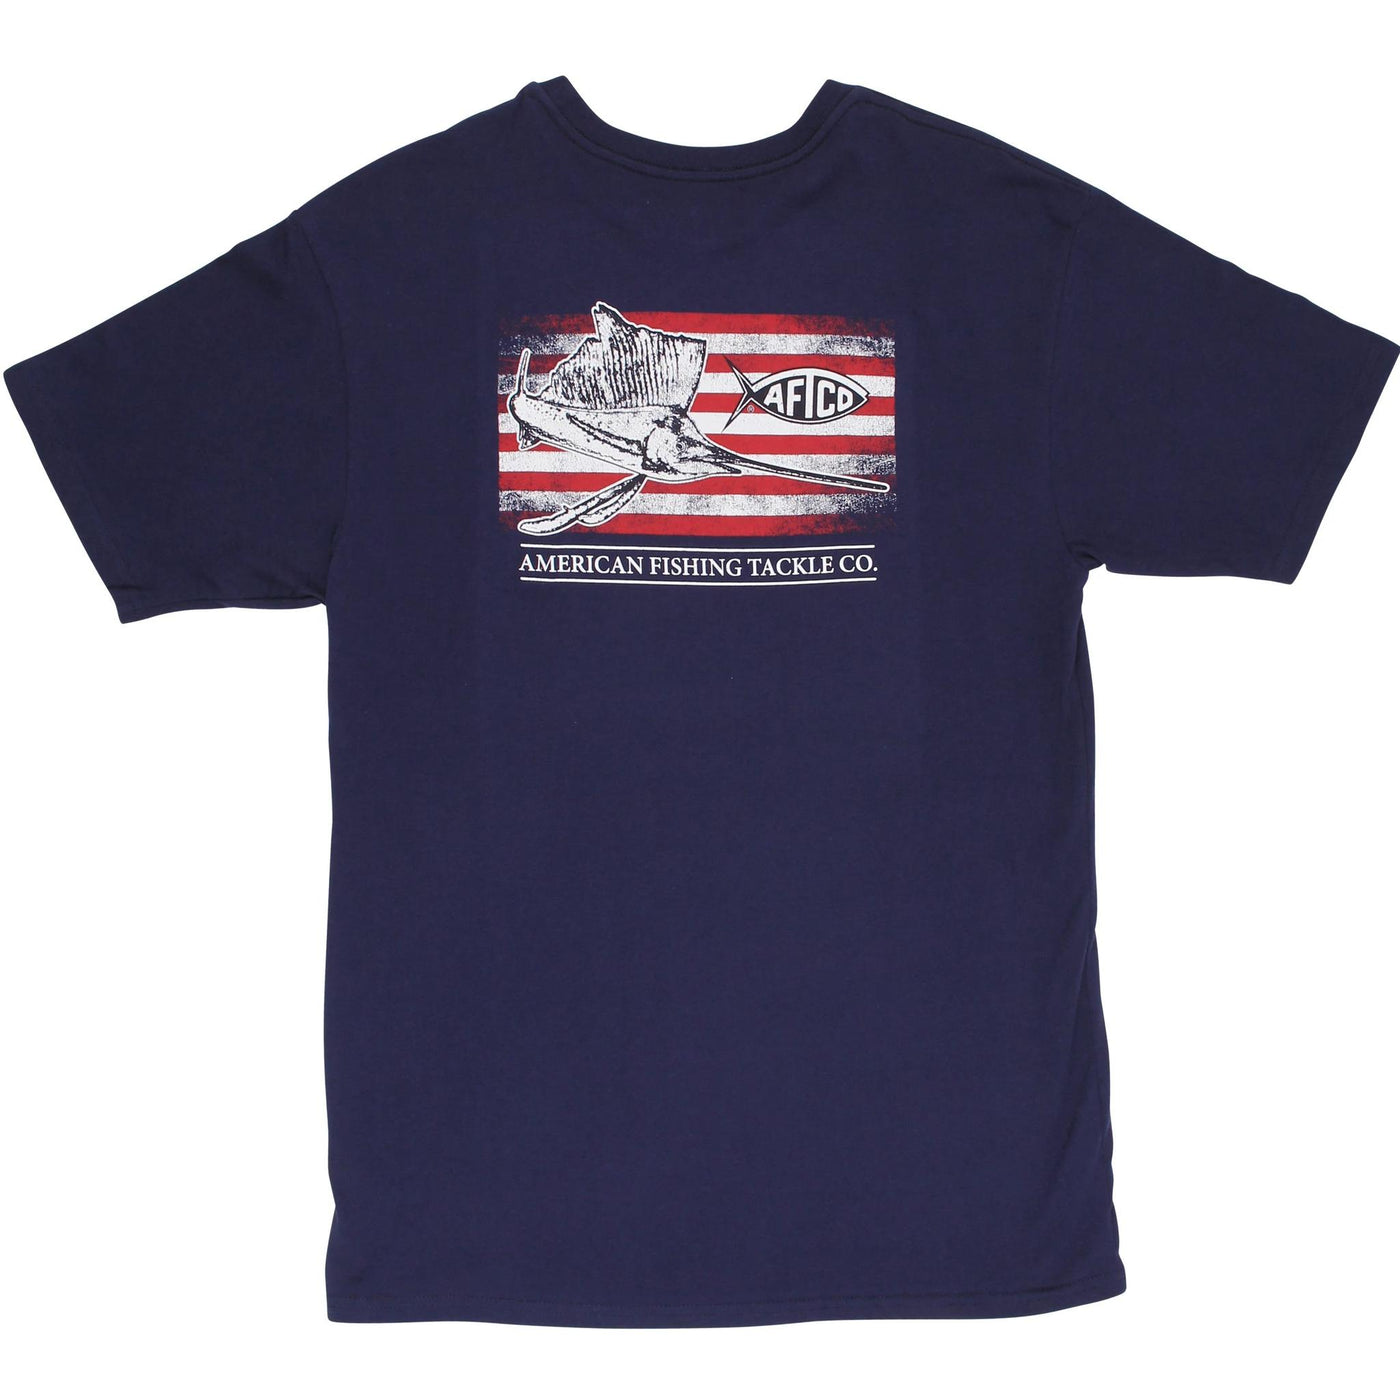 Aftco Alpha Short Sleeve Pocket T-Shirt-MENS CLOTHING-Navy-S-Kevin's Fine Outdoor Gear & Apparel